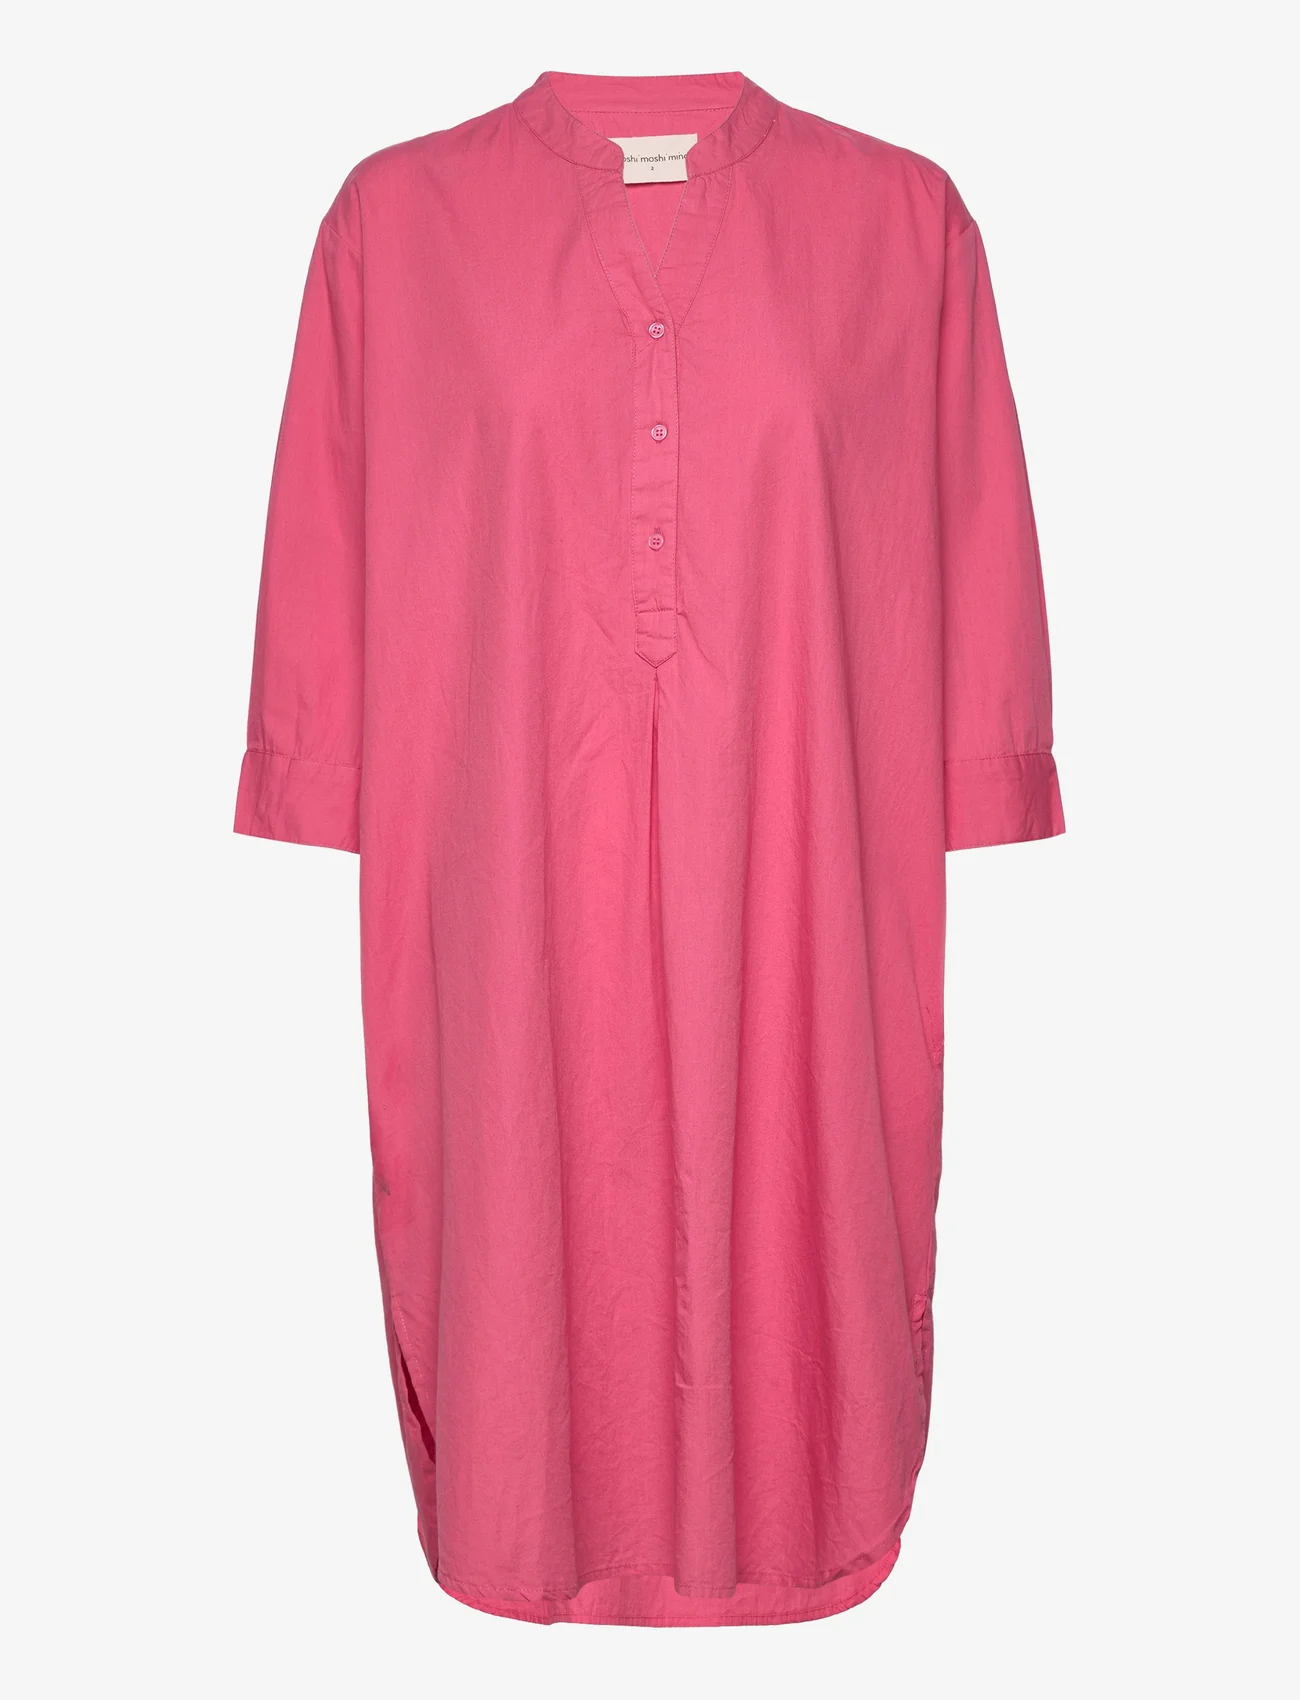 Moshi Moshi Mind - kate shirtdress poplin - blousejurken - pink - 0